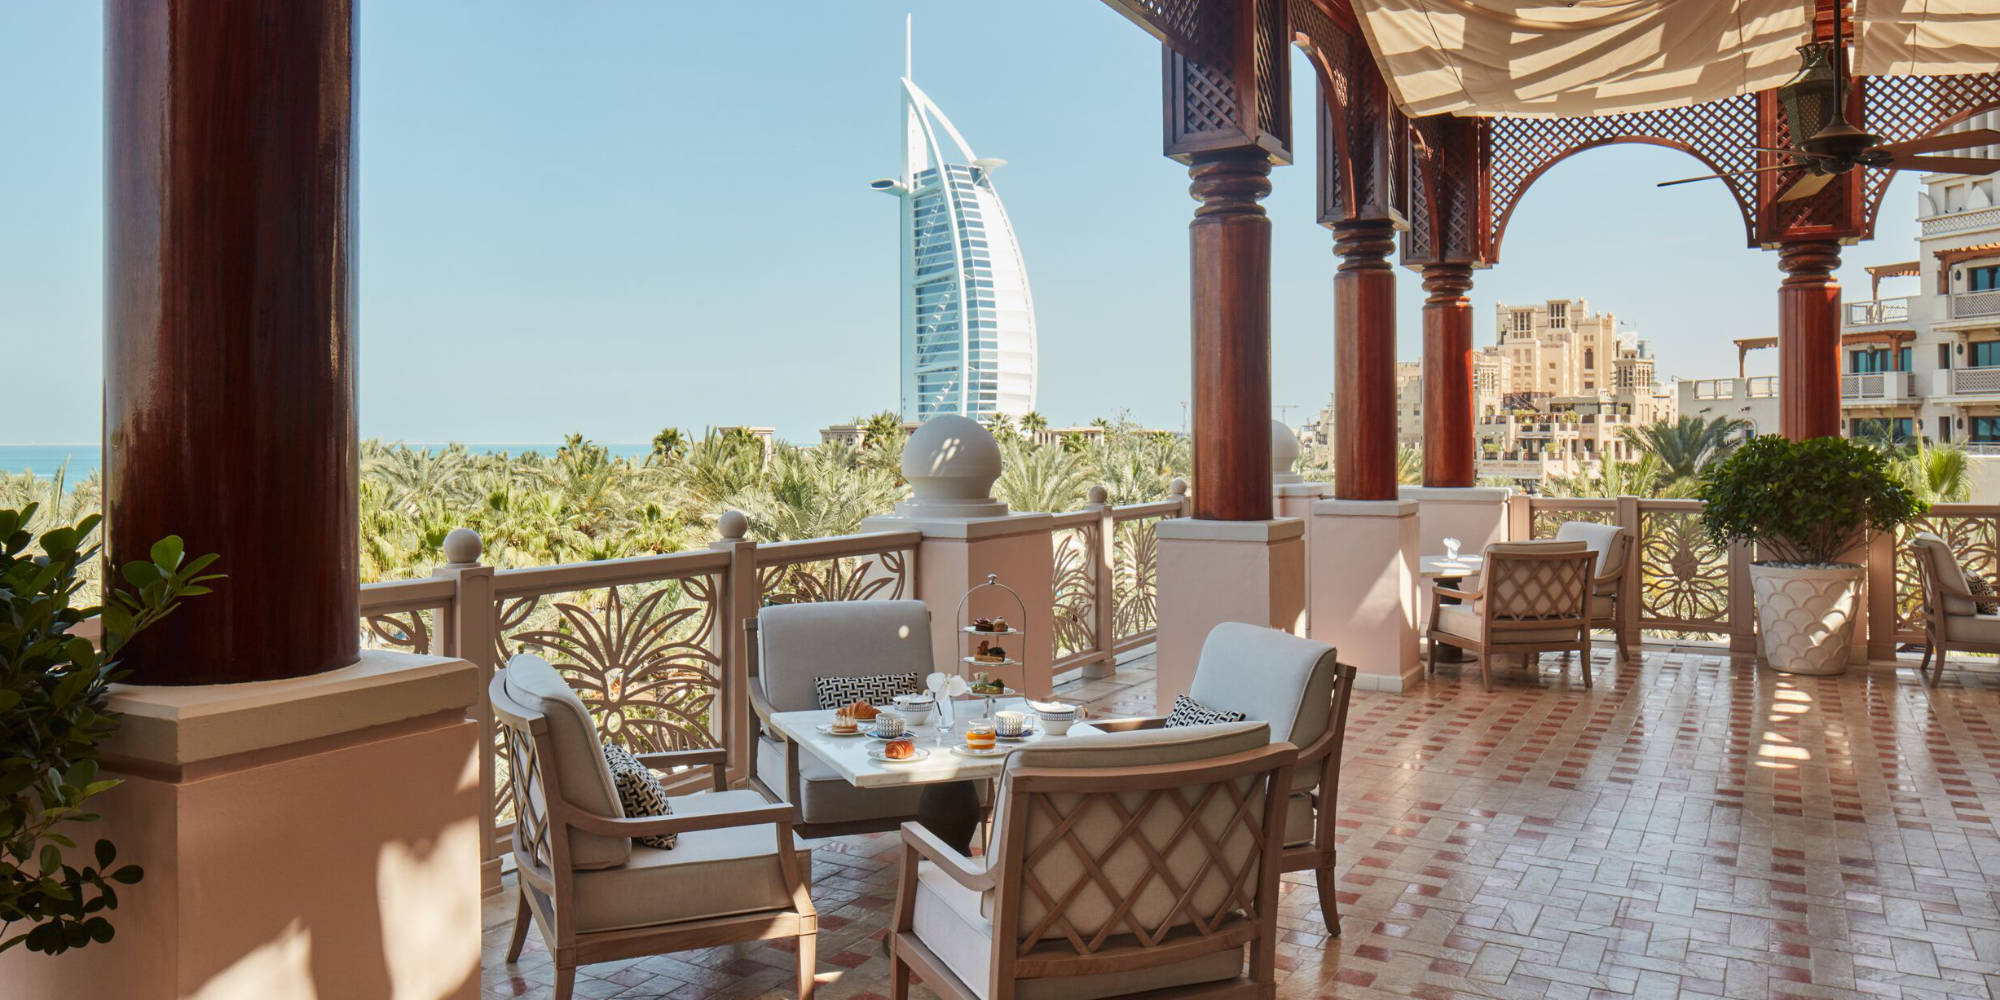 The Jumeirah Al Qasr Resort in Dubai